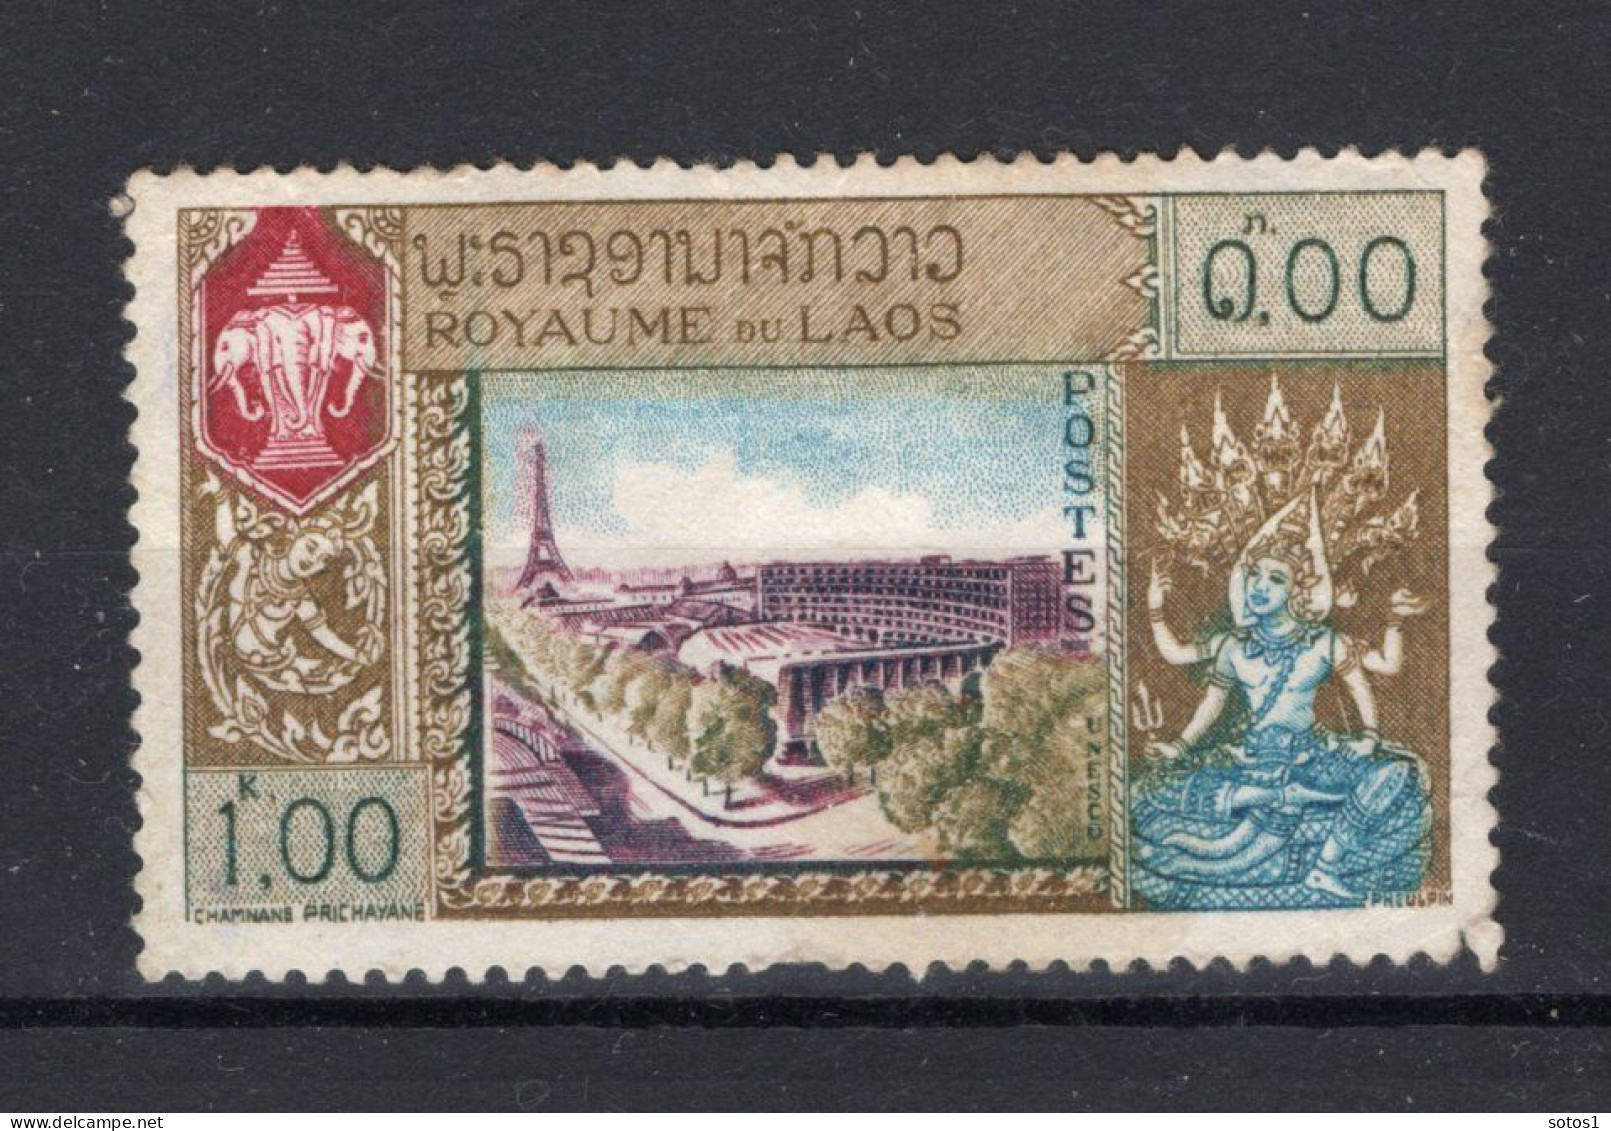 LAOS Yt. 54 MH* 1958 - Laos